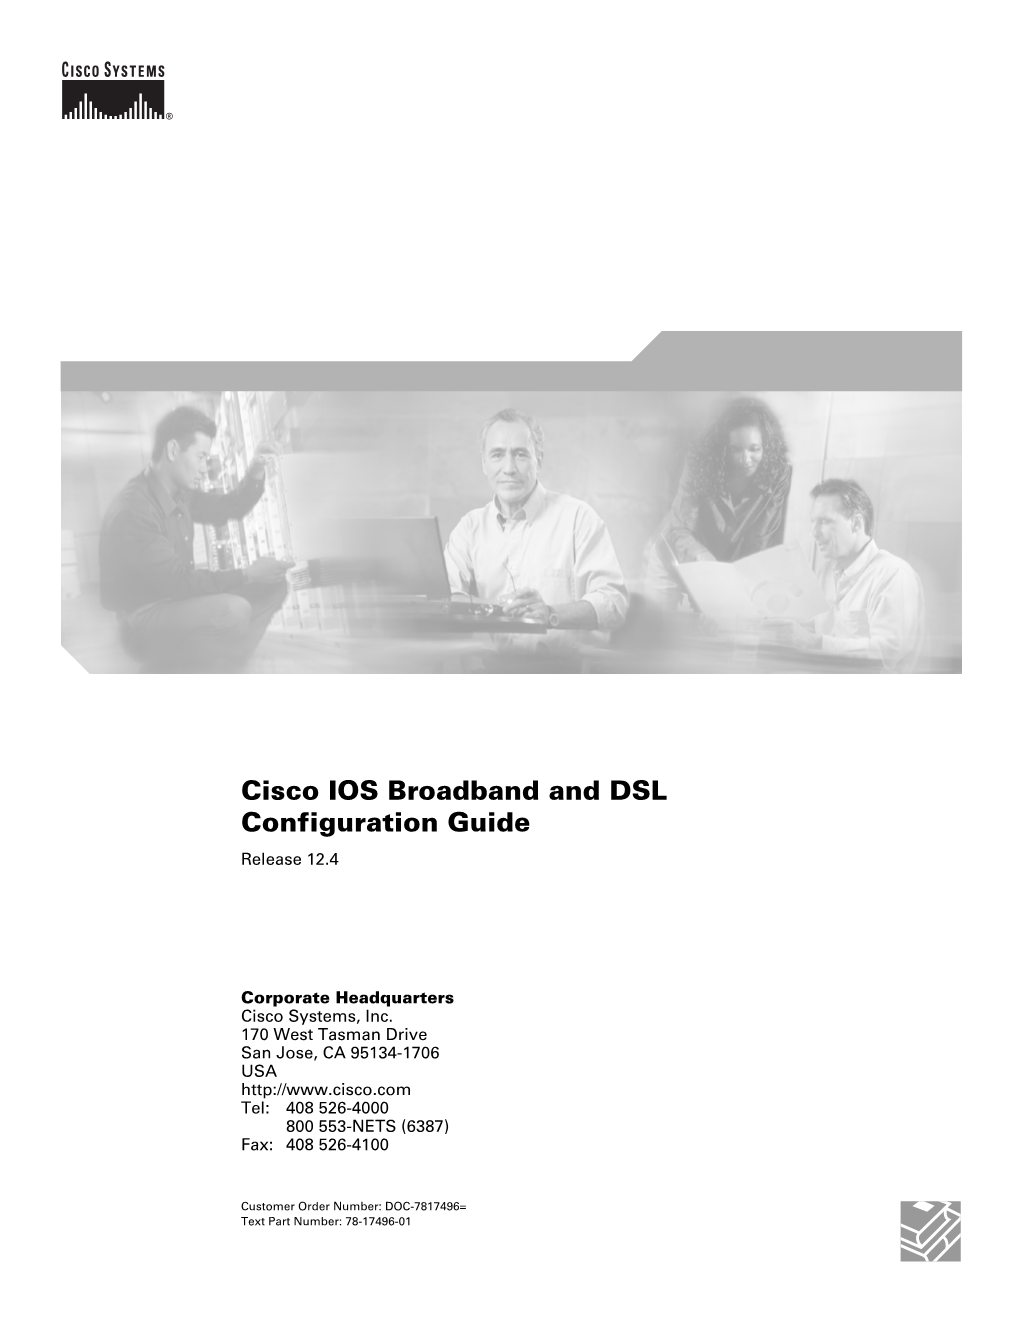 Cisco IOS Broadband and DSL Configuration Guide Release 12.4